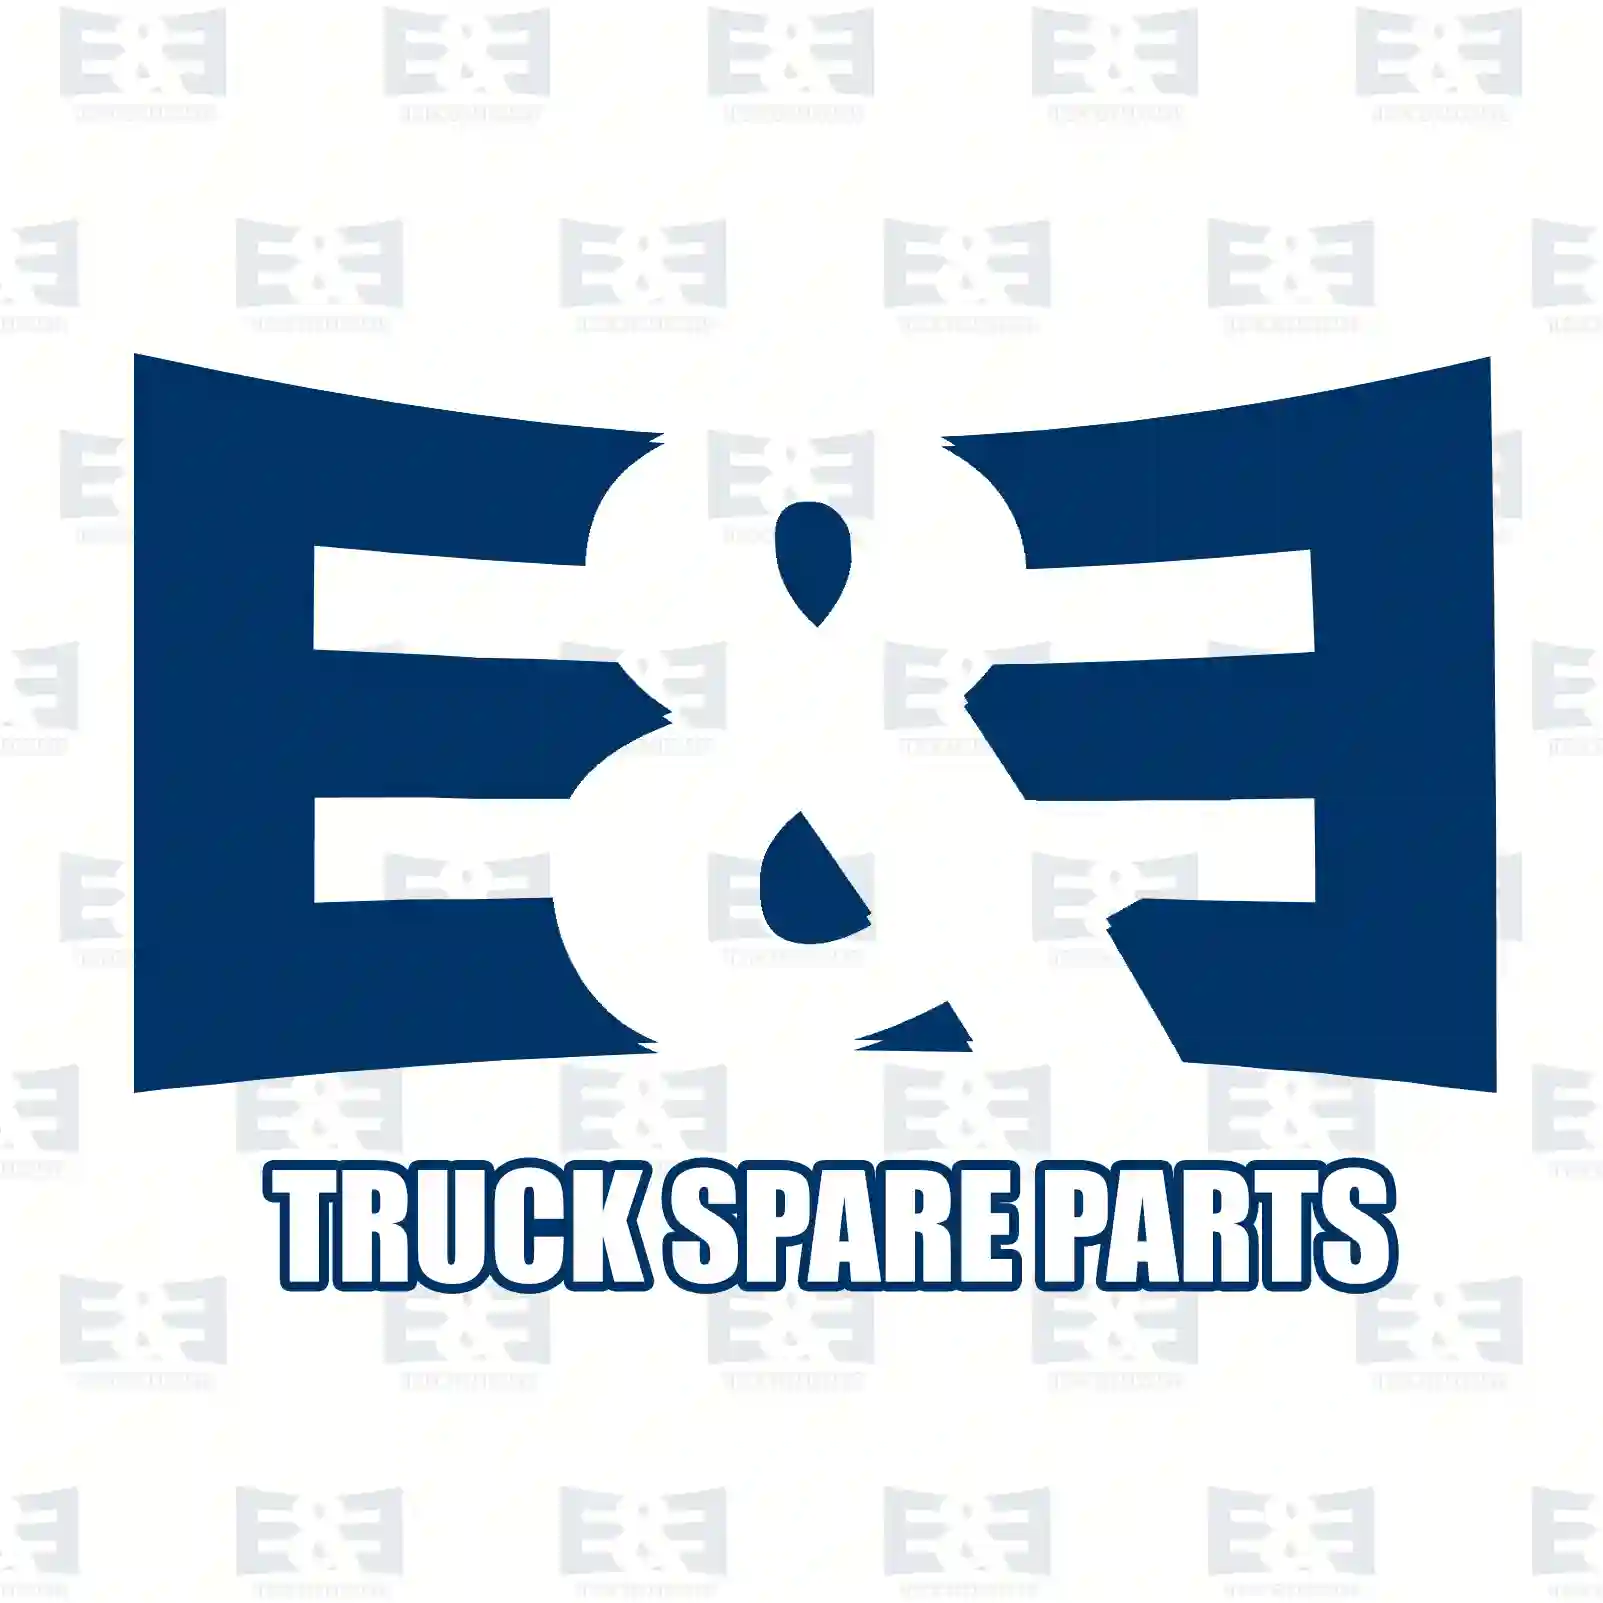 Drum brake lining kit, axle kit, 2E2293009, 5001855146, 5001019222, 5001823240, 5001855122, 5001855146, 5001860048, MBLK2290 ||  2E2293009 E&E Truck Spare Parts | Truck Spare Parts, Auotomotive Spare Parts Drum brake lining kit, axle kit, 2E2293009, 5001855146, 5001019222, 5001823240, 5001855122, 5001855146, 5001860048, MBLK2290 ||  2E2293009 E&E Truck Spare Parts | Truck Spare Parts, Auotomotive Spare Parts